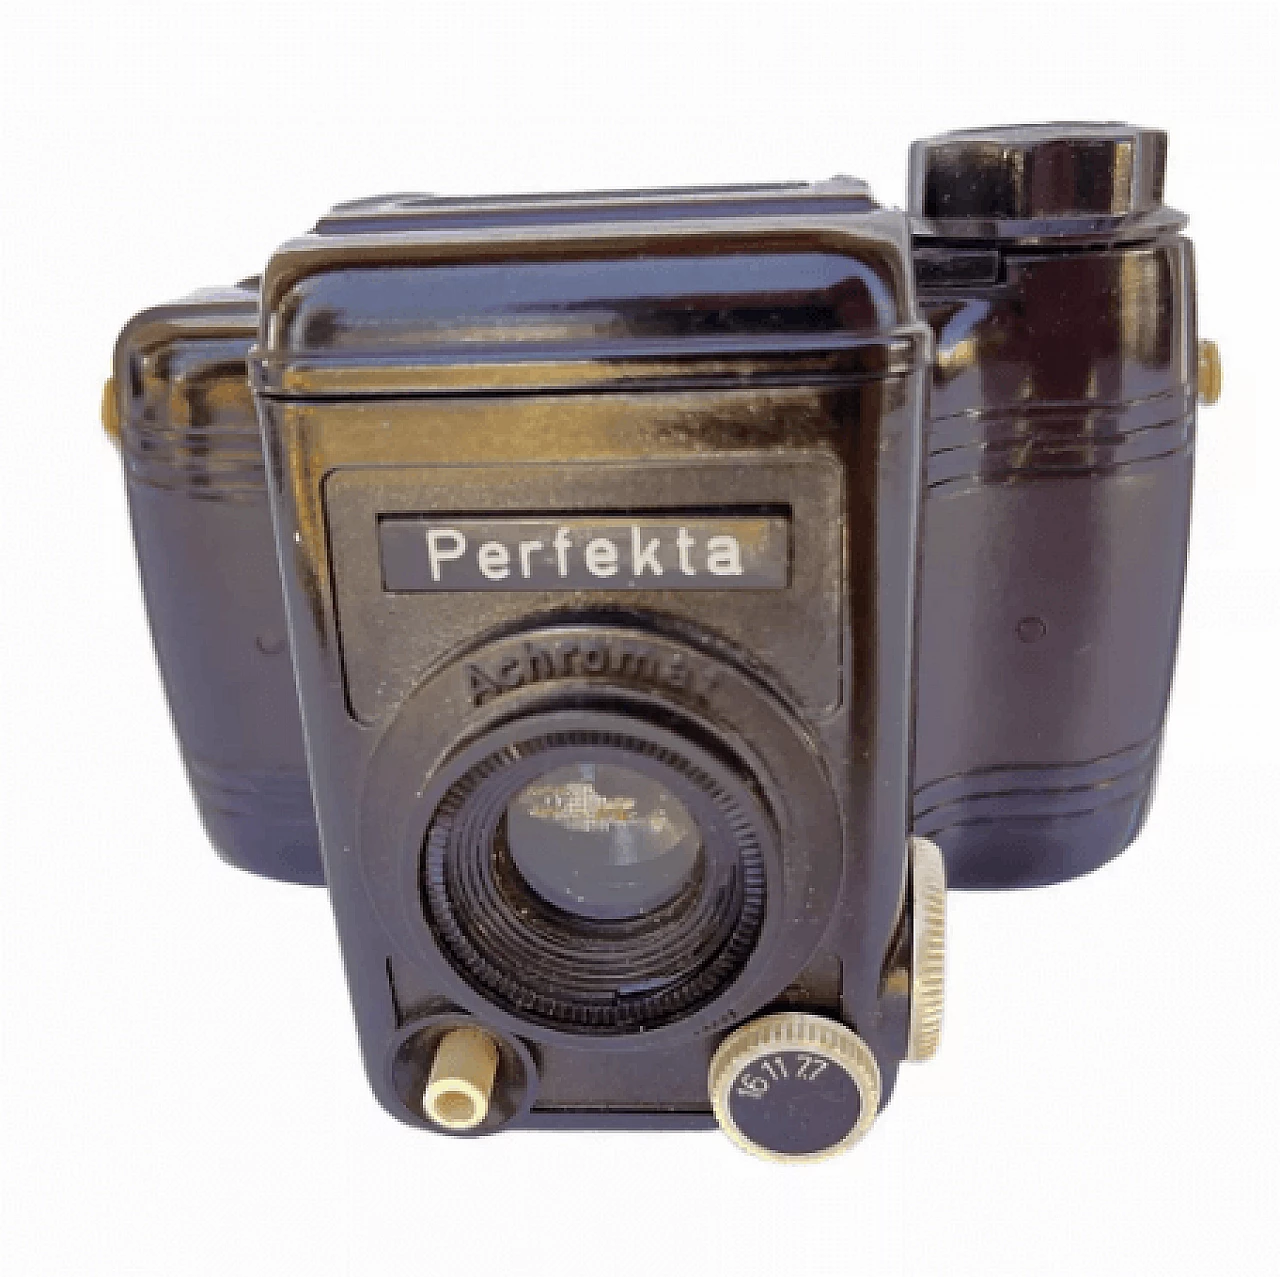 Perfekta Aeromat camera by VEB Rheinmatall, 1950s 10